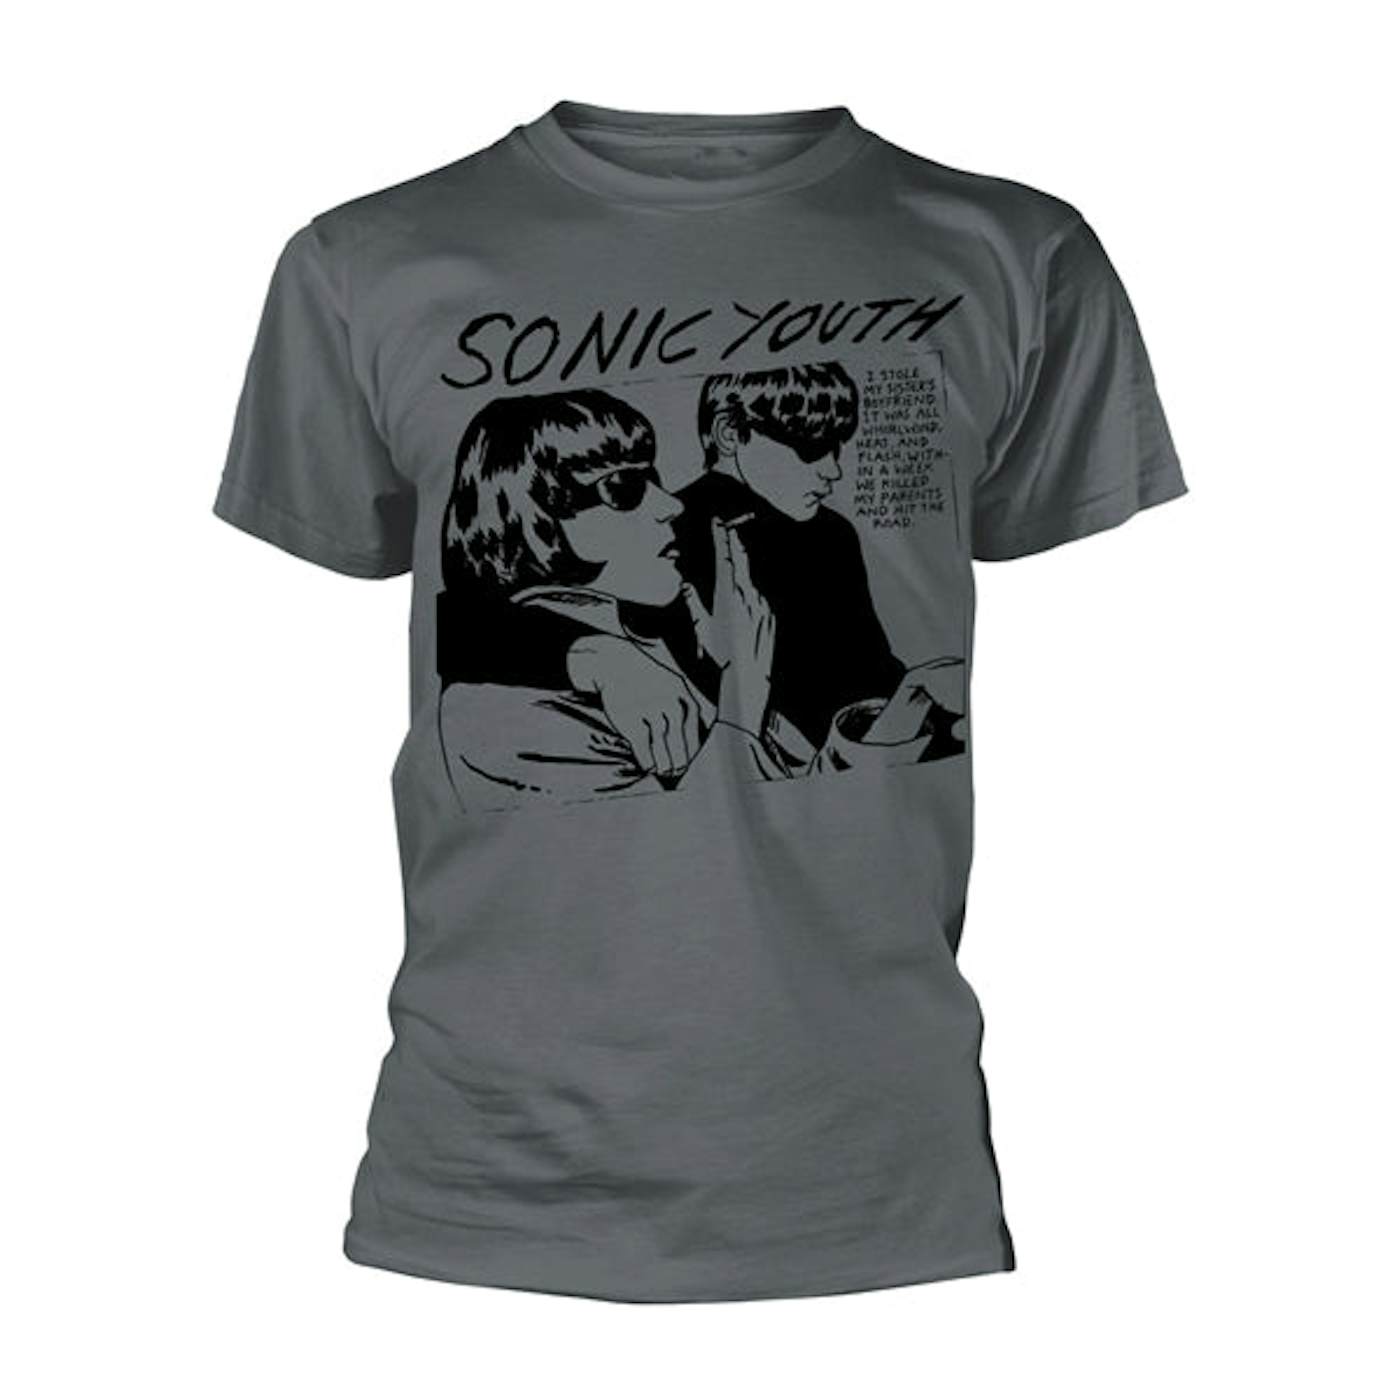 Sonic Youth T-Shirt - Goo Album Cover (Charcoal)